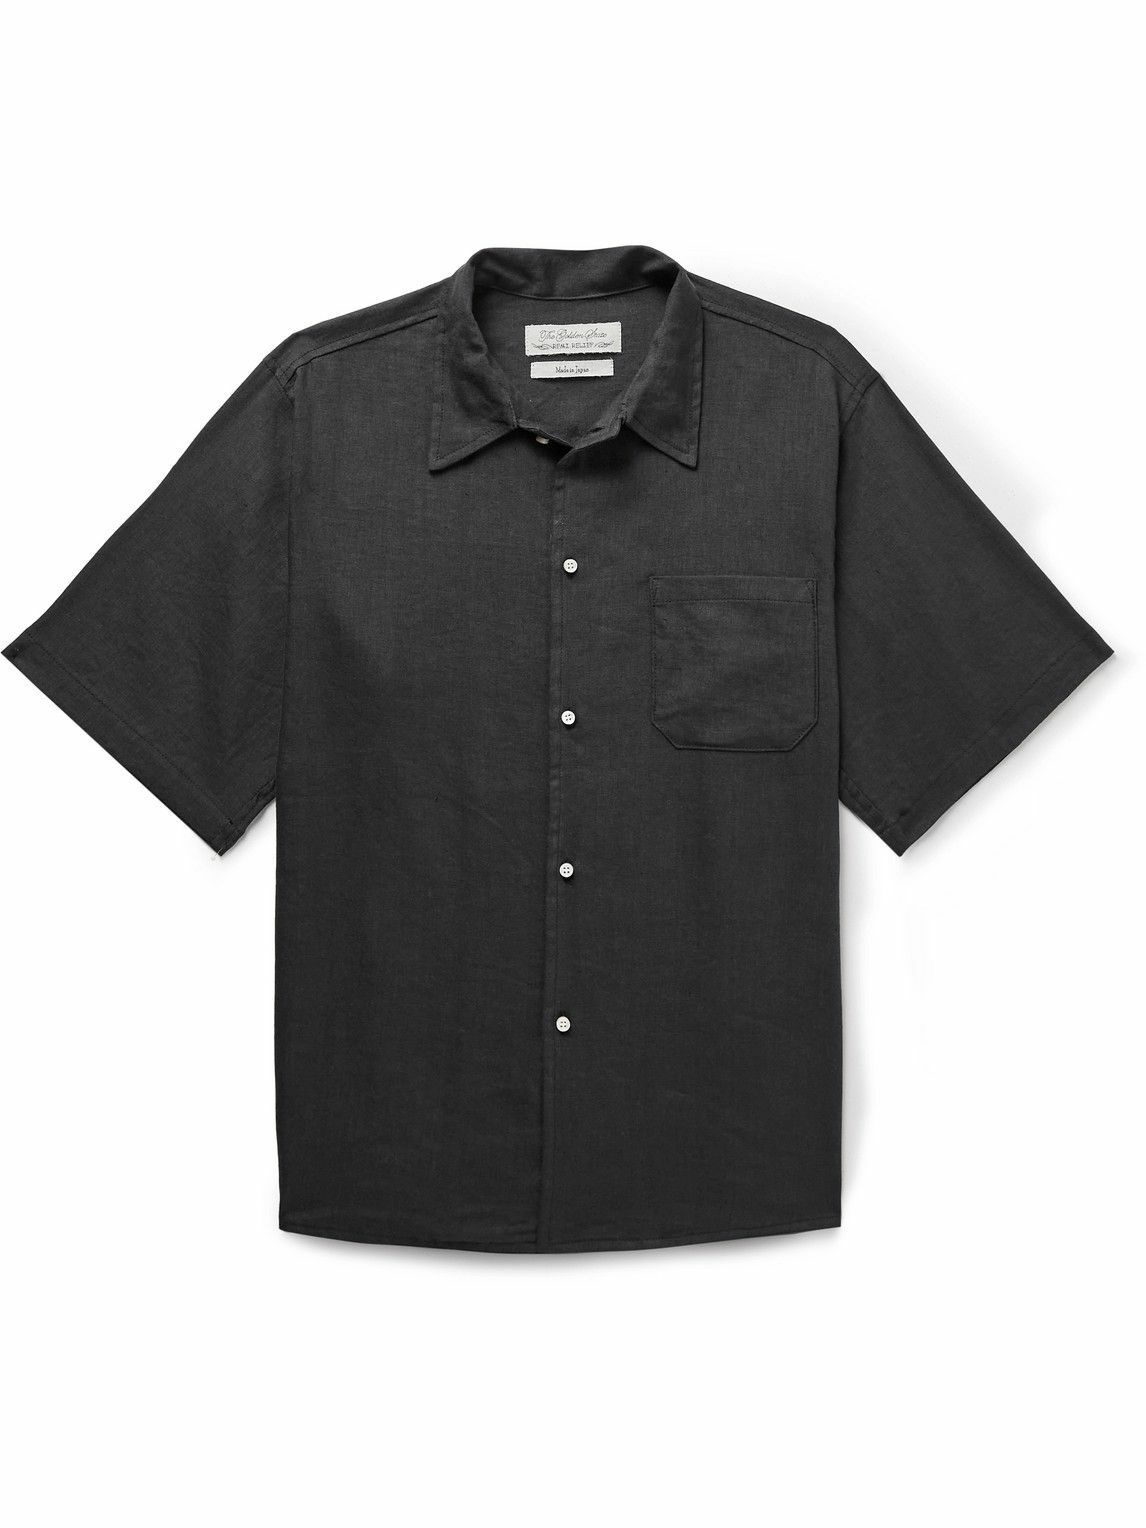 Remi Relief - Linen-Blend Shirt - Black Remi Relief